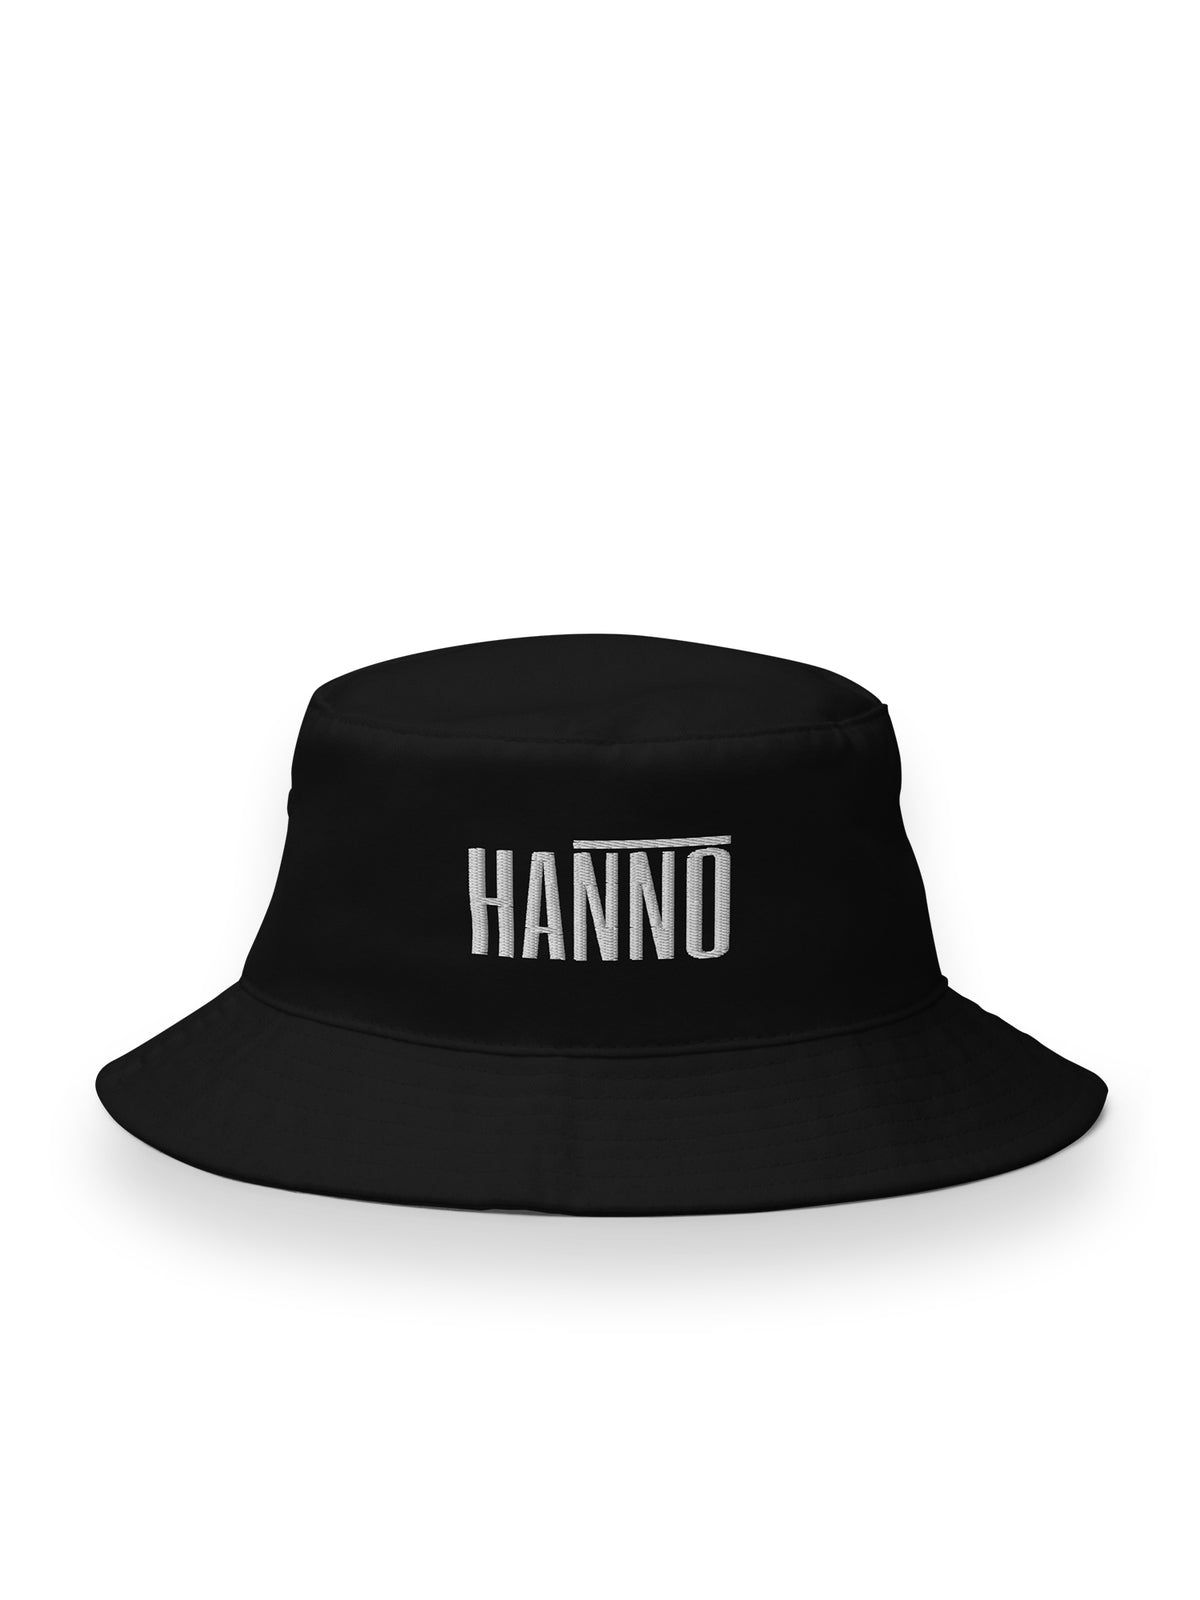 Black bucket hat with white logo